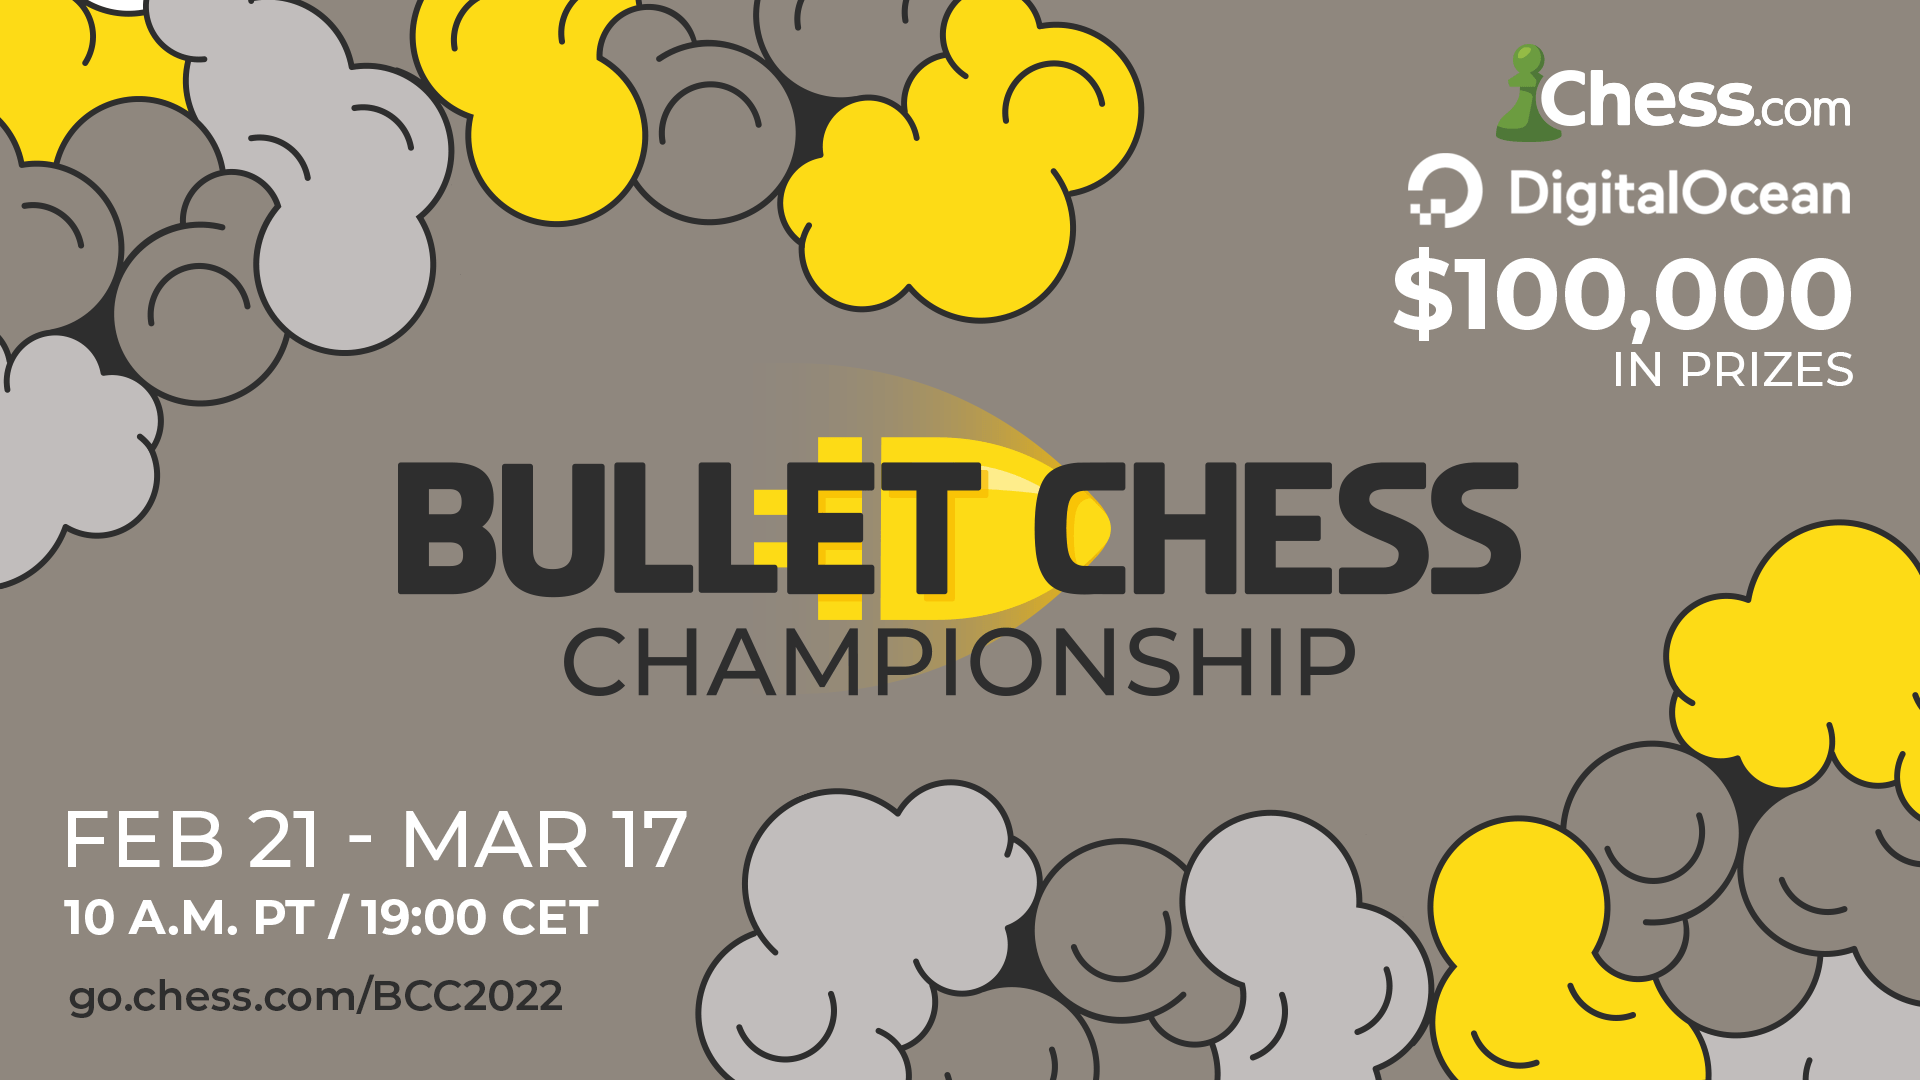 Stockfish Wins Computer Chess Championship Bullet; 'Escalation' Next - Chess .com